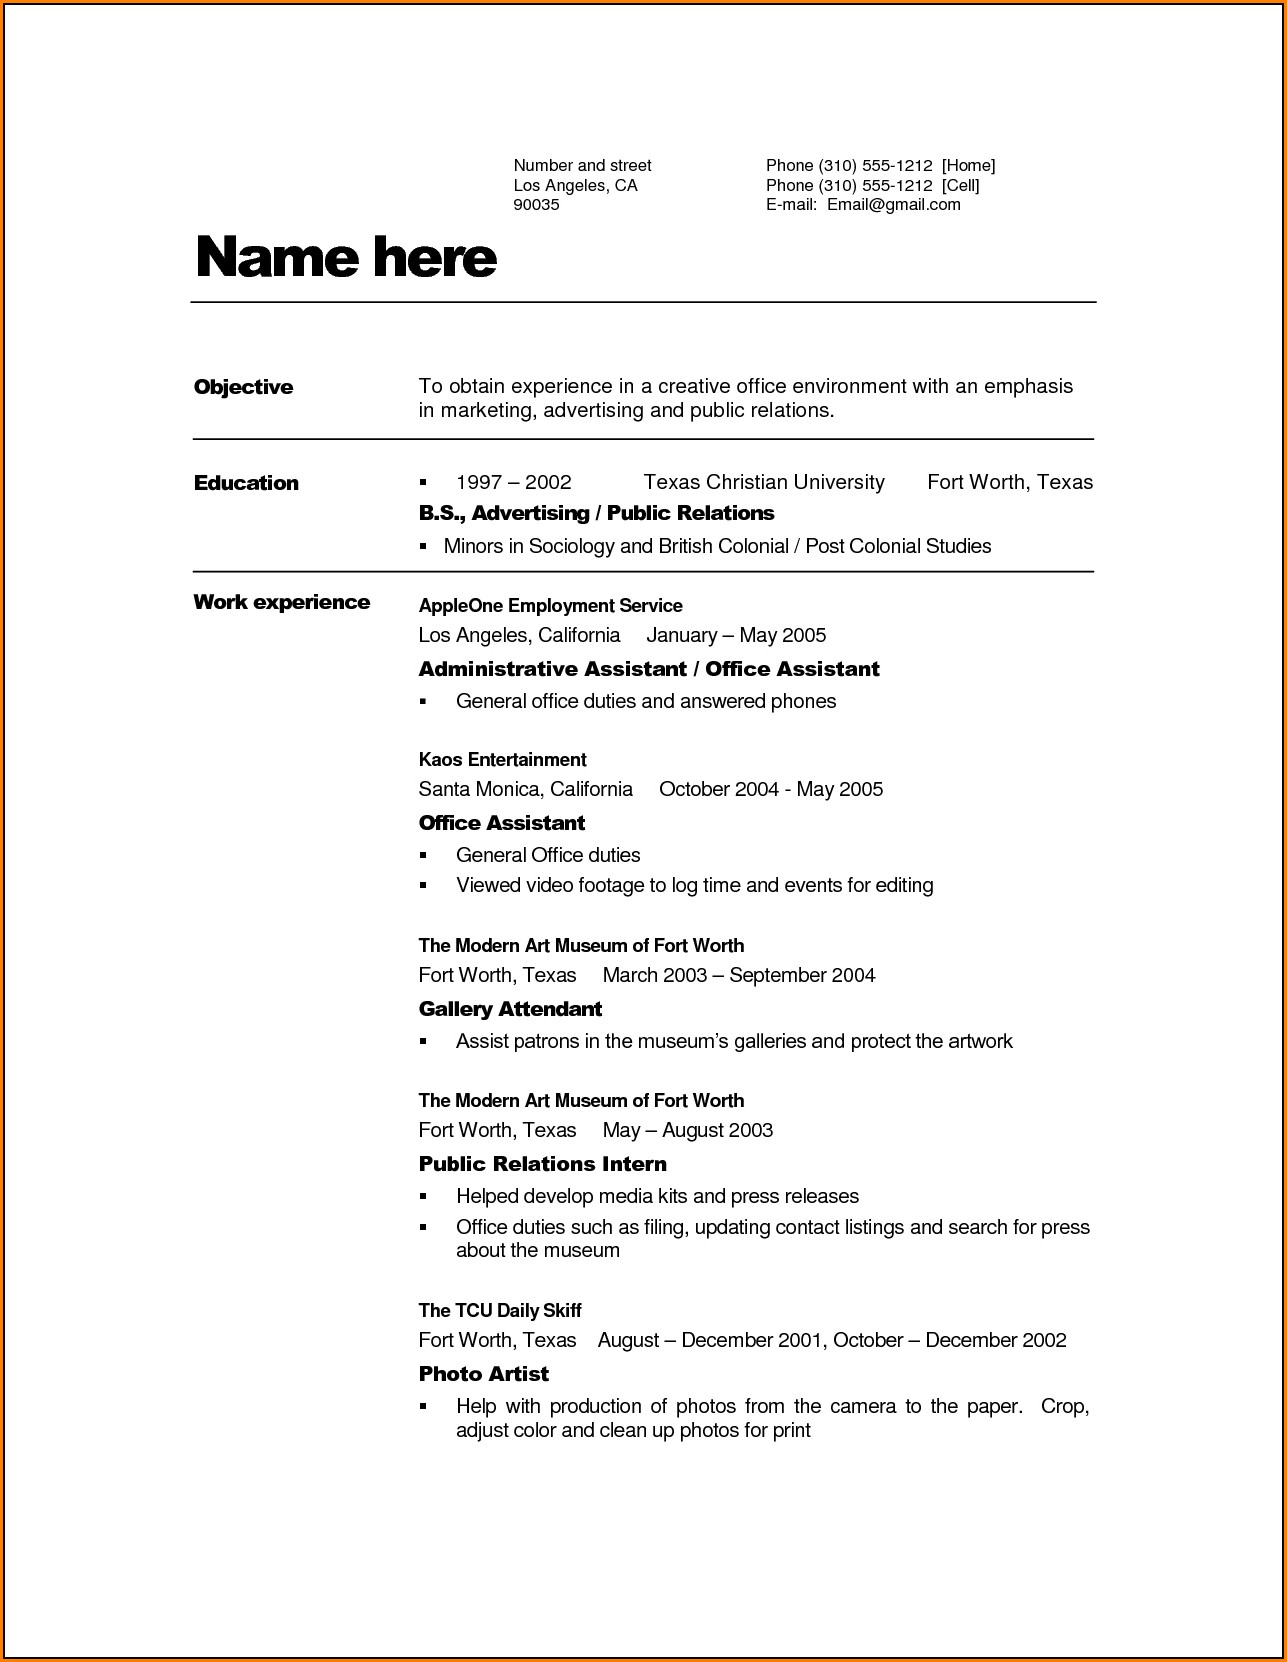 resume-template-australia-free-sutajoyoa